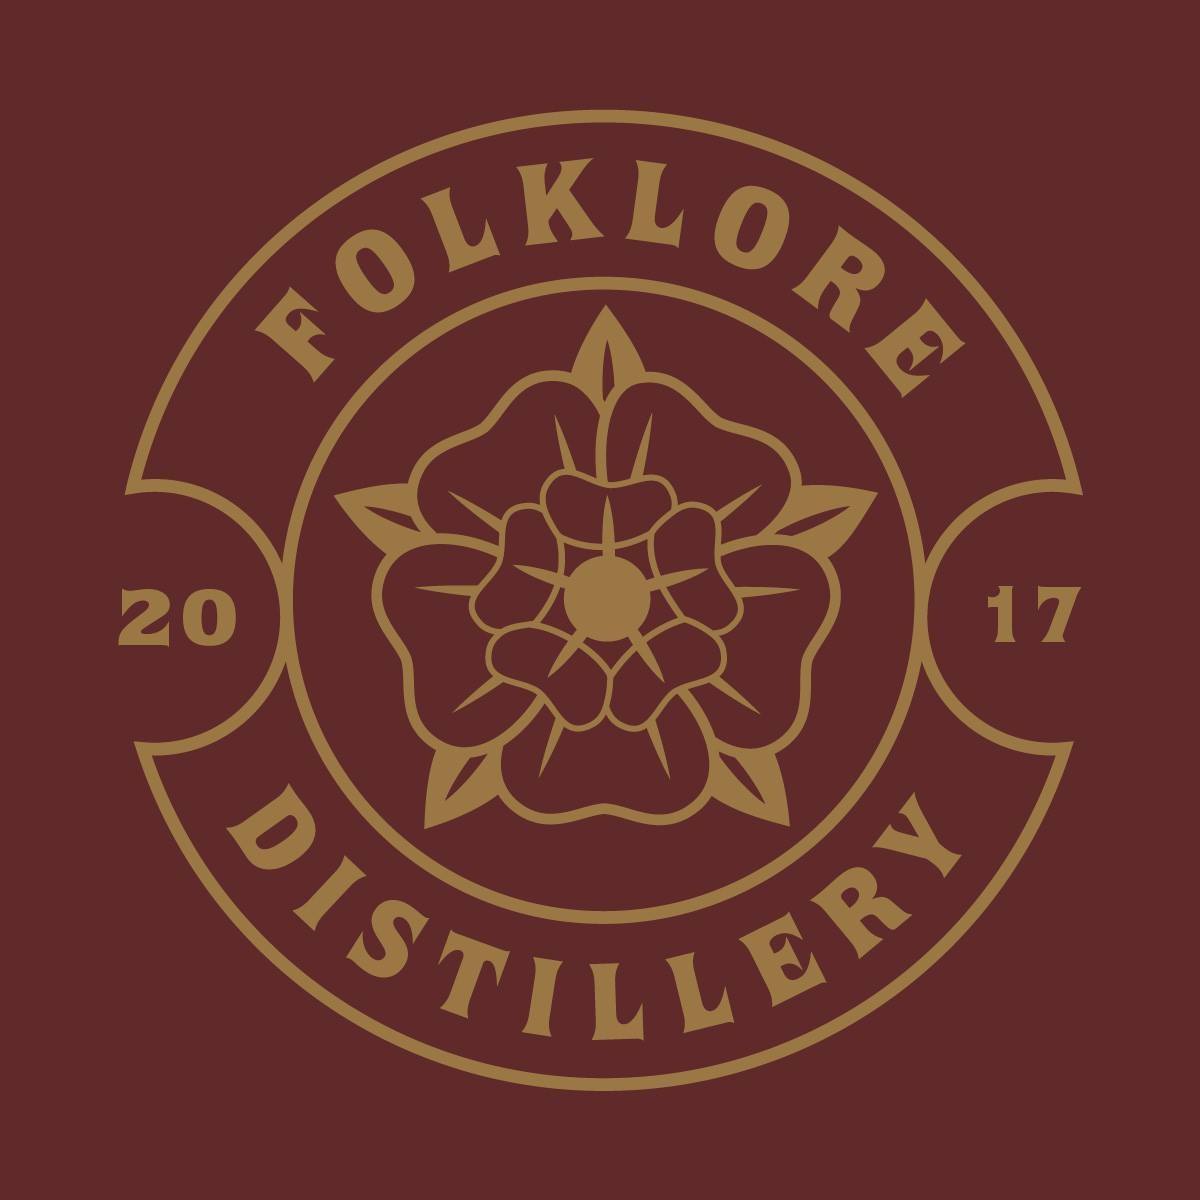 Folklore Distillery